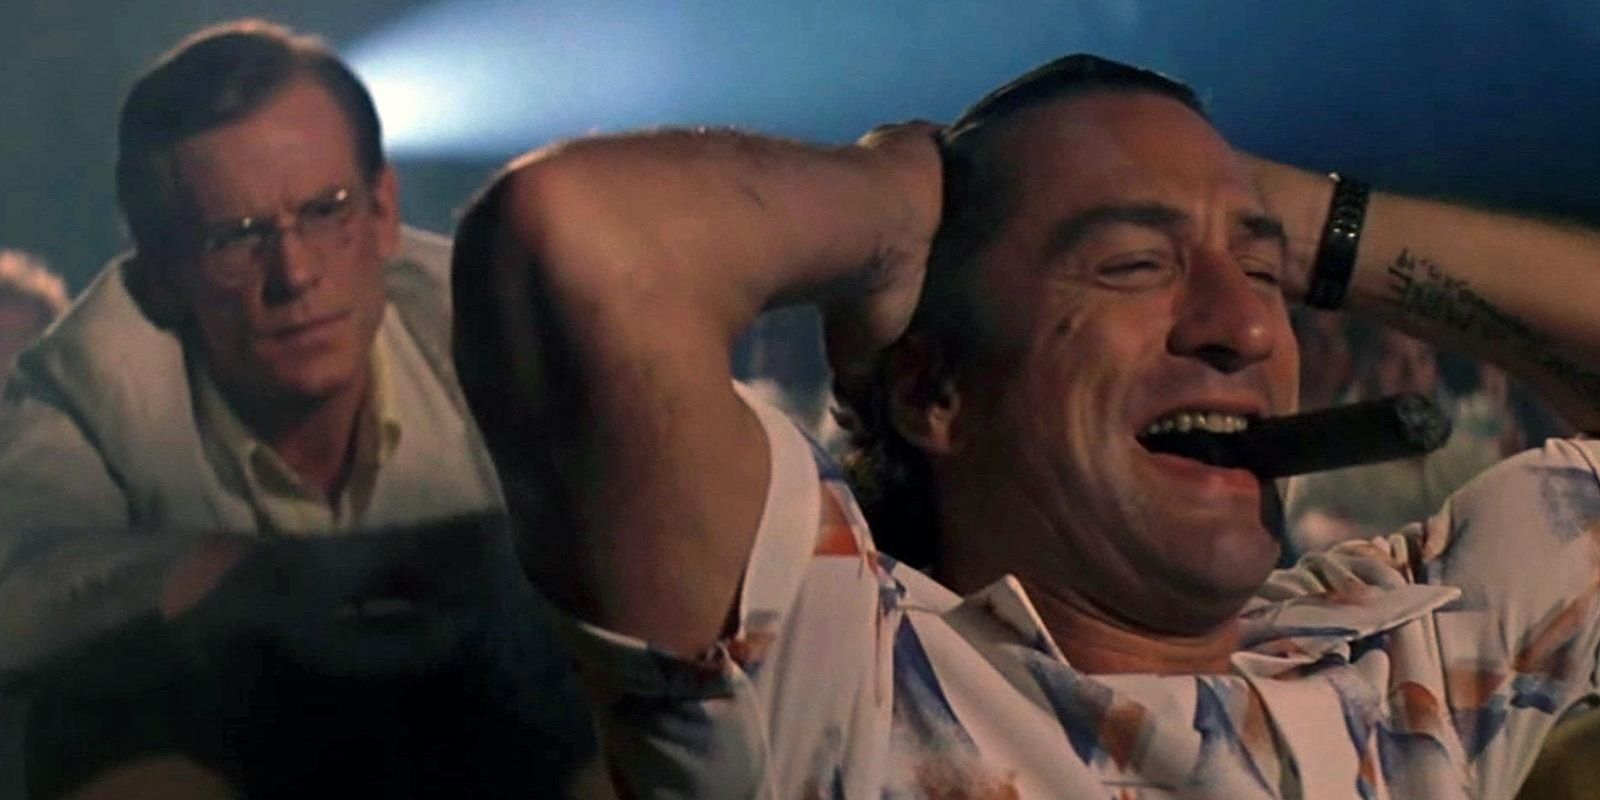 Robert De Niro laughing in a movie theater in Cape Fear